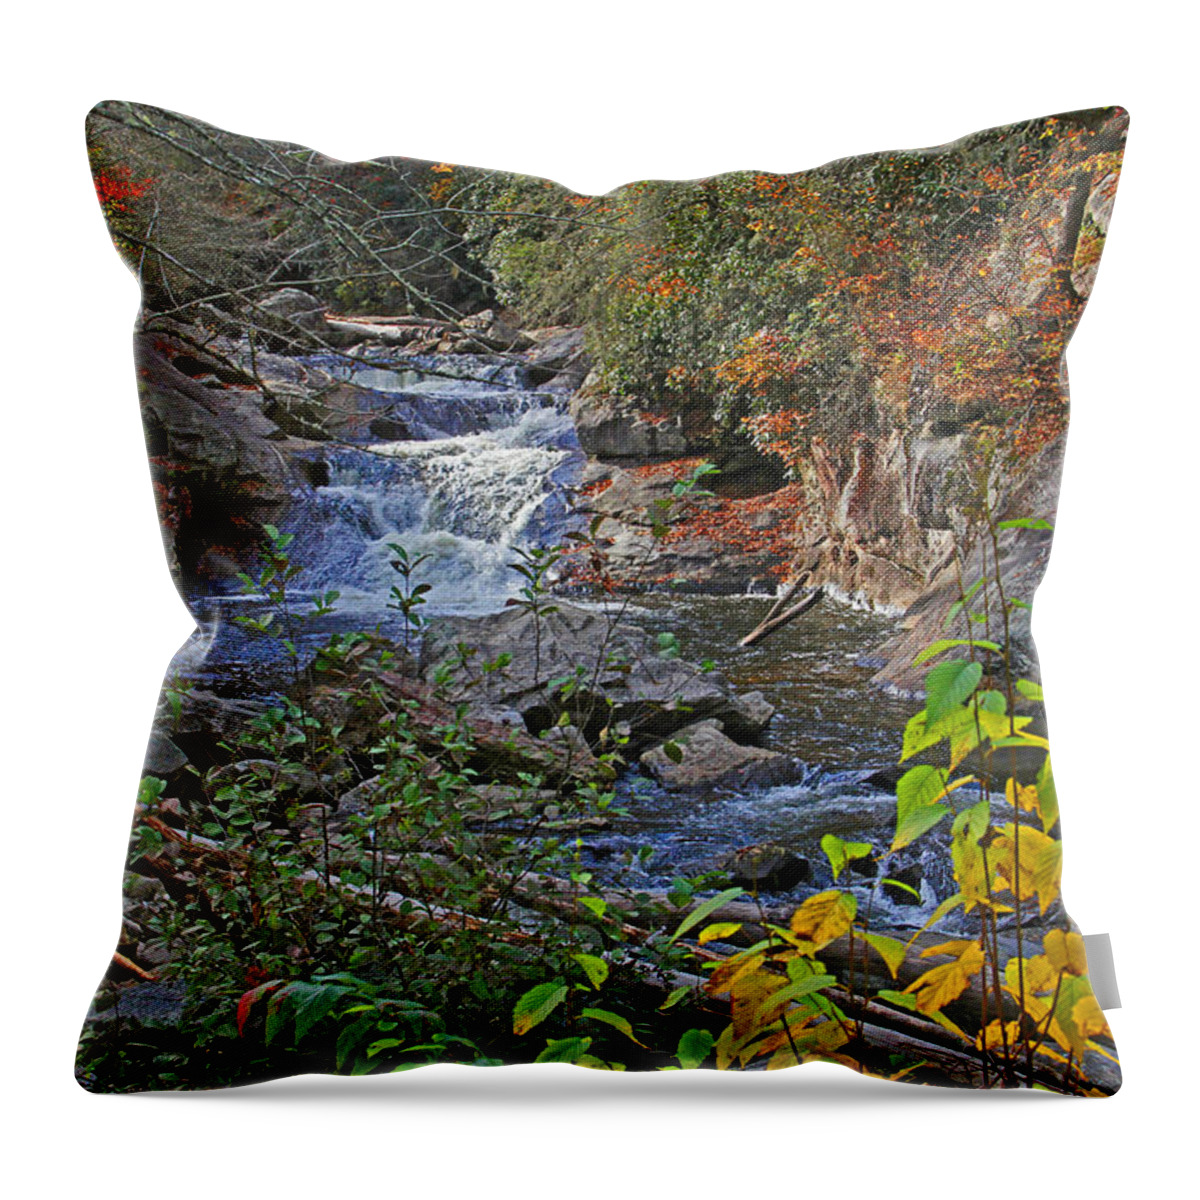 Appalachia Throw Pillow featuring the photograph Mountain Splendor by HH Photography of Florida